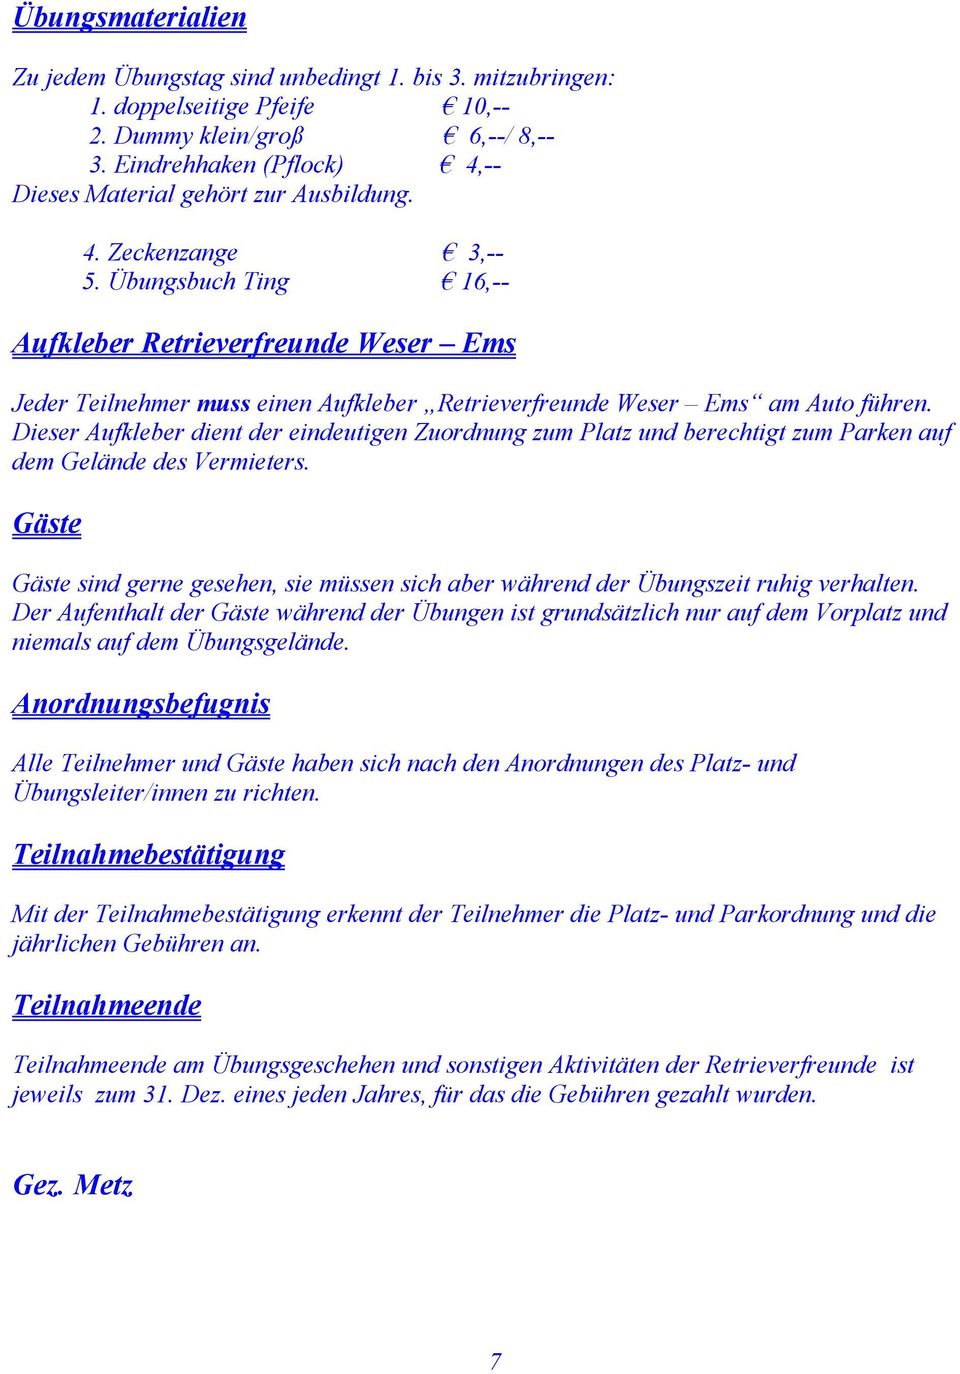 Übungsbuch Ting 16,-- Aufkleber Retrieverfreunde Weser Ems Jeder Teilnehmer muss einen Aufkleber Retrieverfreunde Weser Ems am Auto führen.